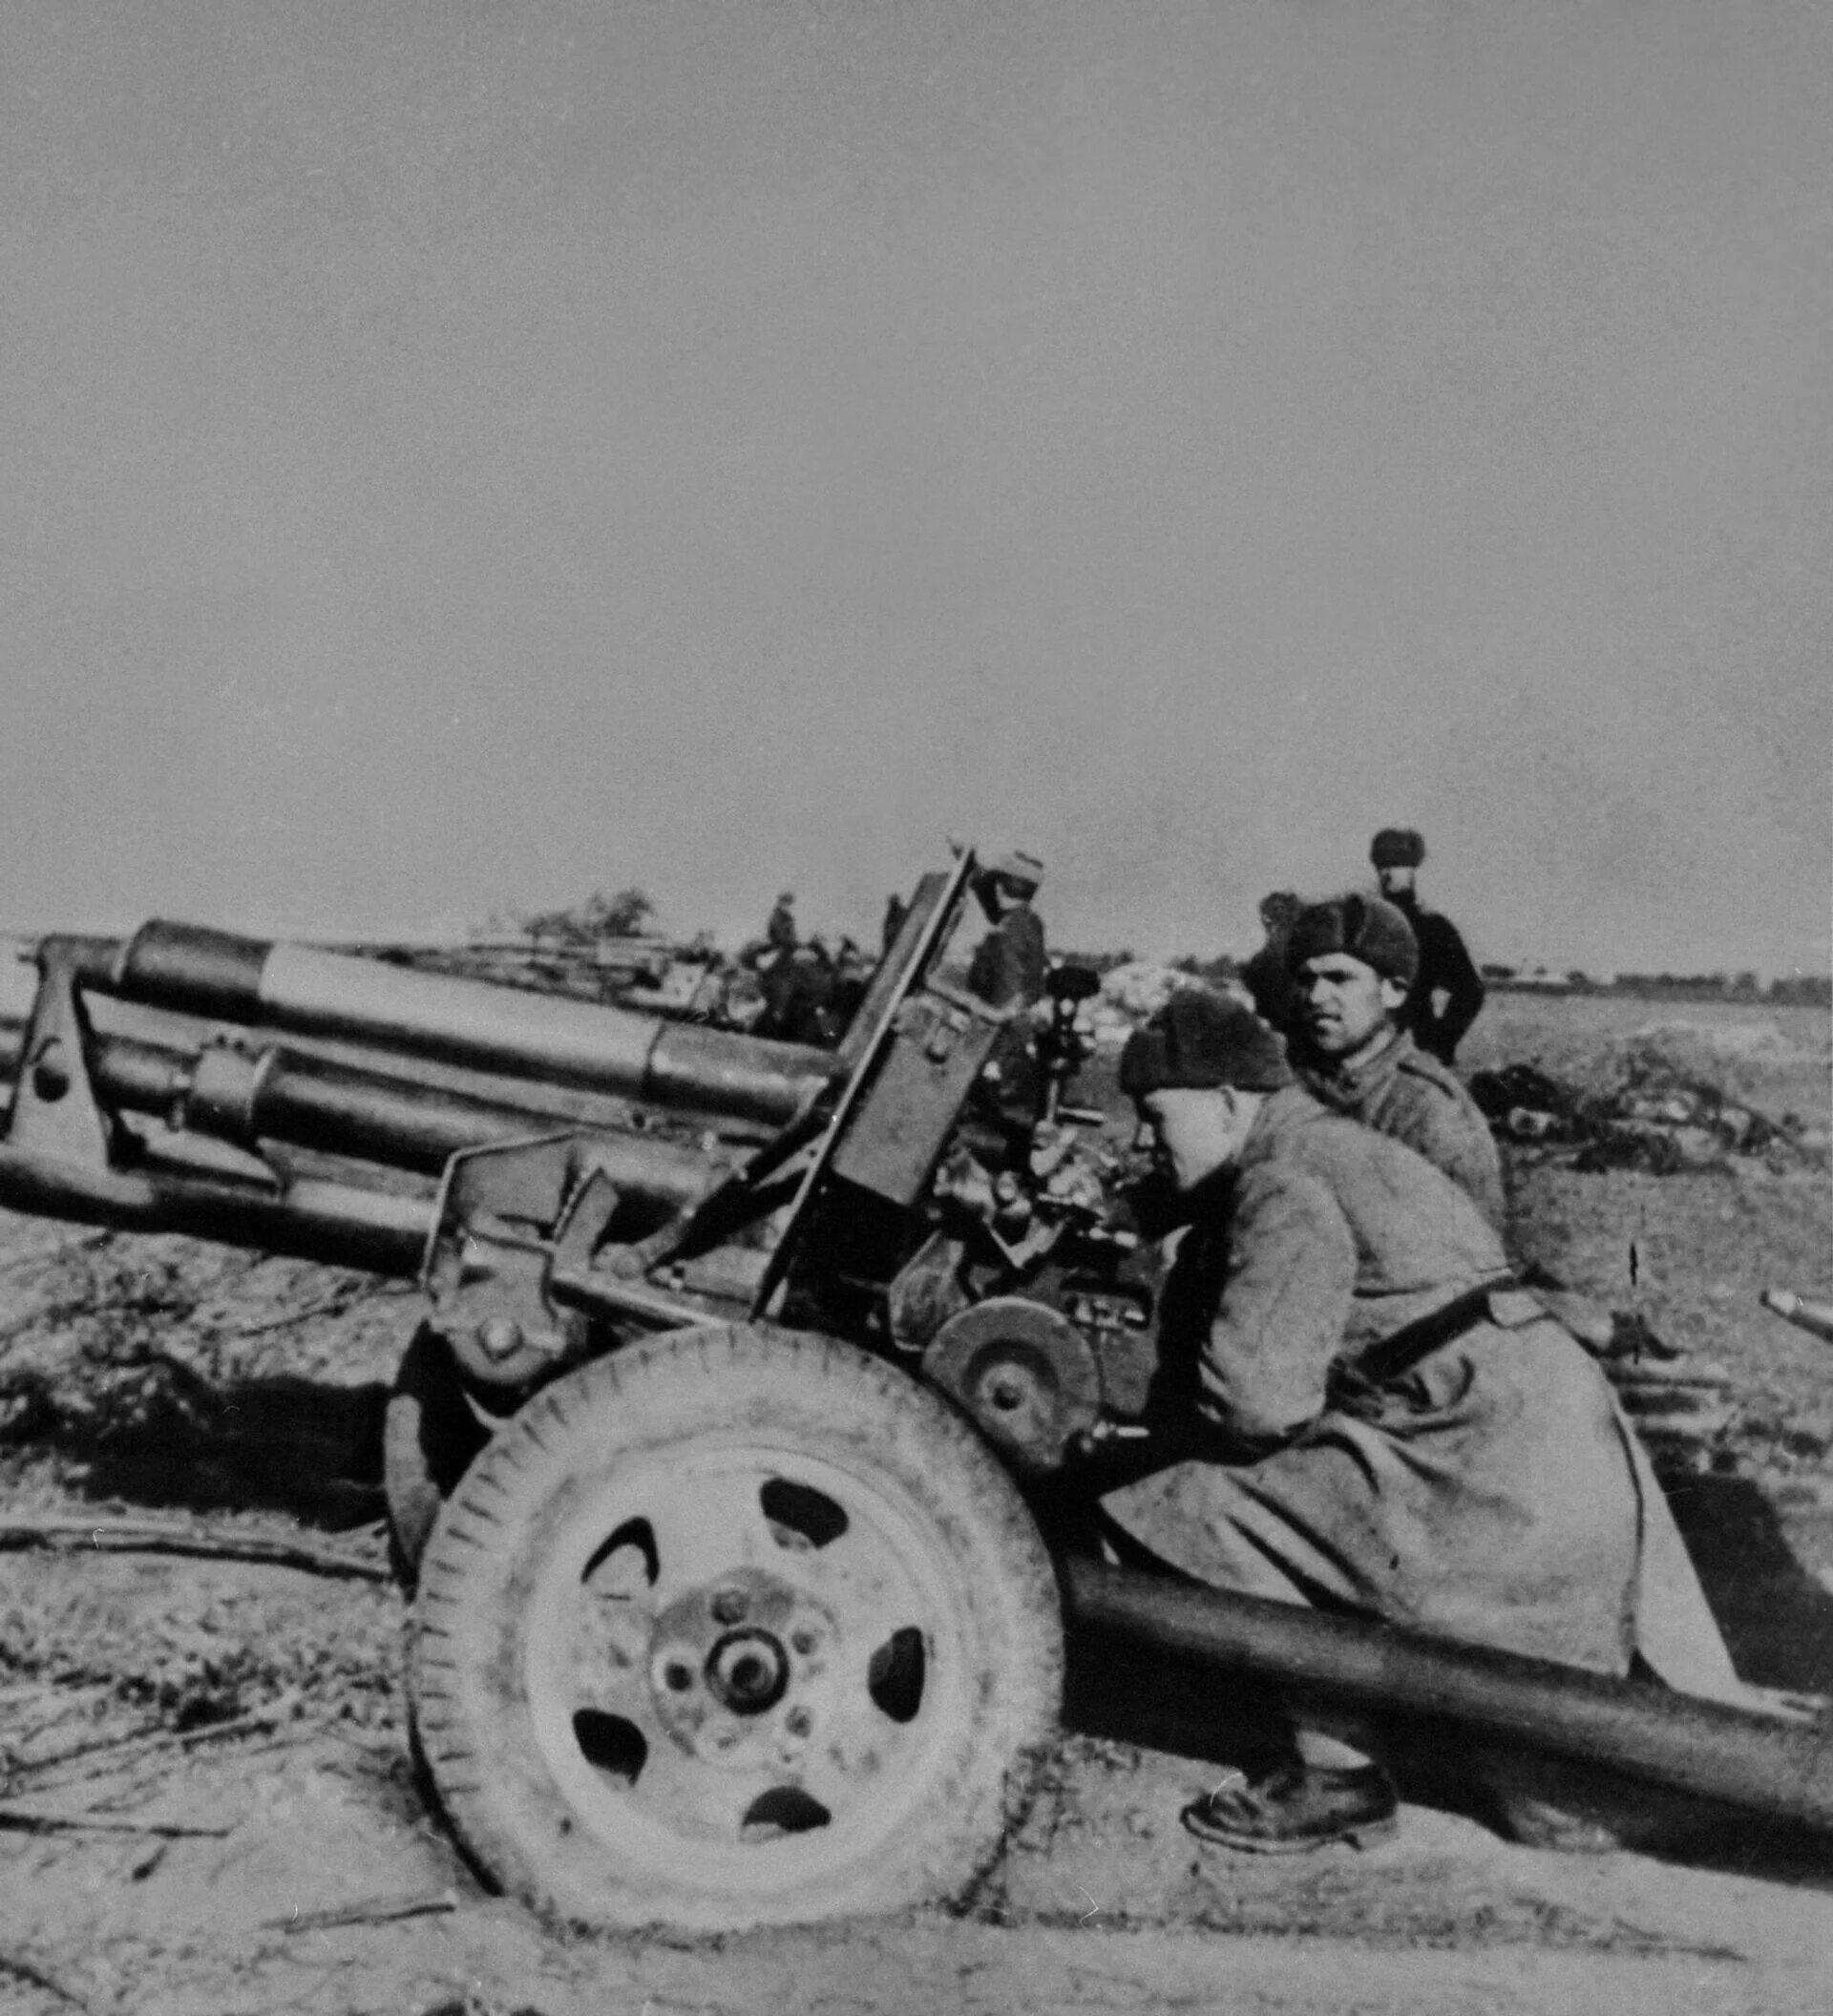 Артиллерист во время войны. Пушка Грабина ЗИС-3. 76 Мм пушка ВОВ. Артиллерия ВОВ 1941-1945. Артиллеристы ВОВ 1941-1945.